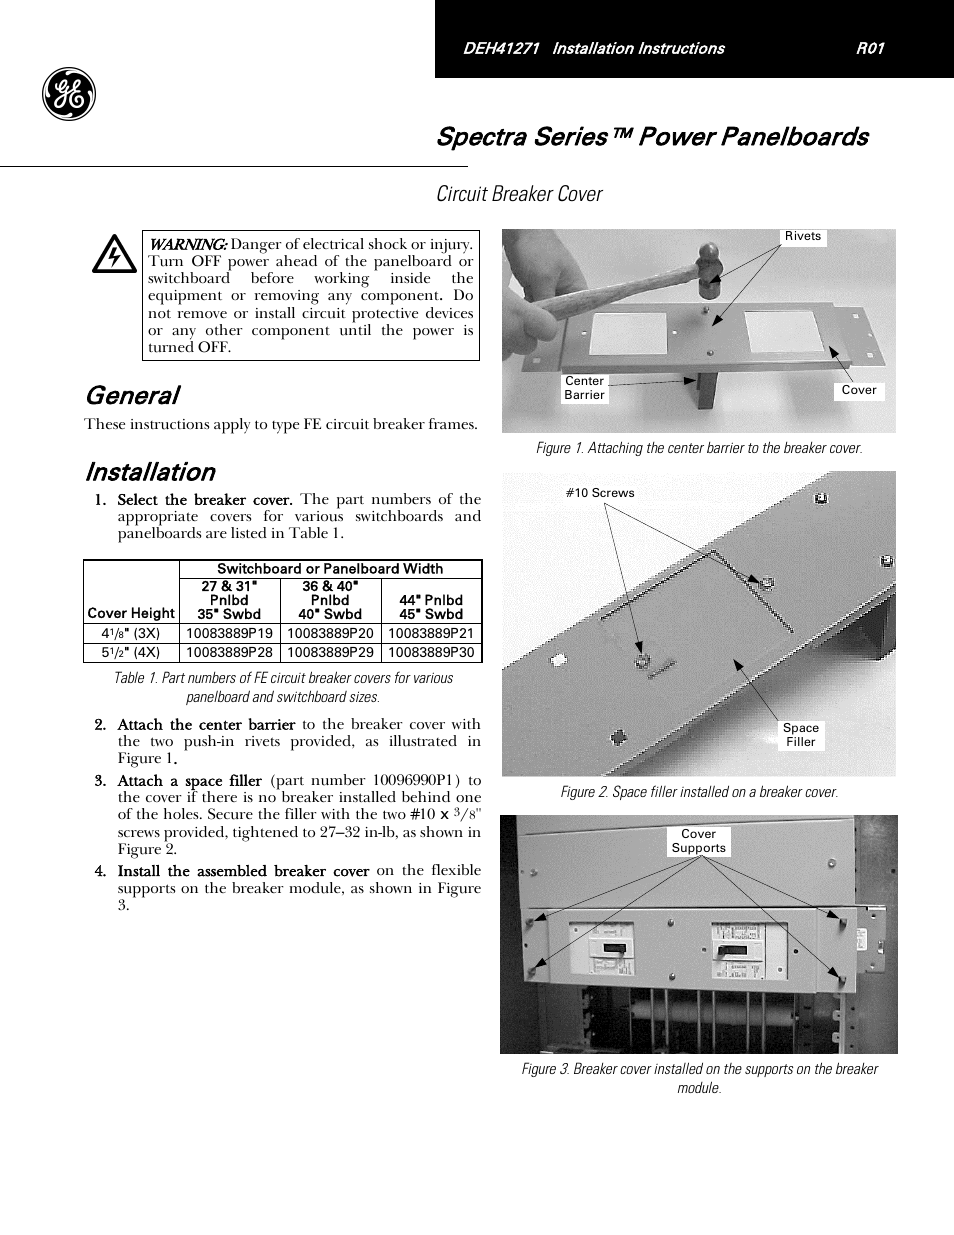 Spectra Power Panelboard: Record Plus FE Breaker Cover Kit